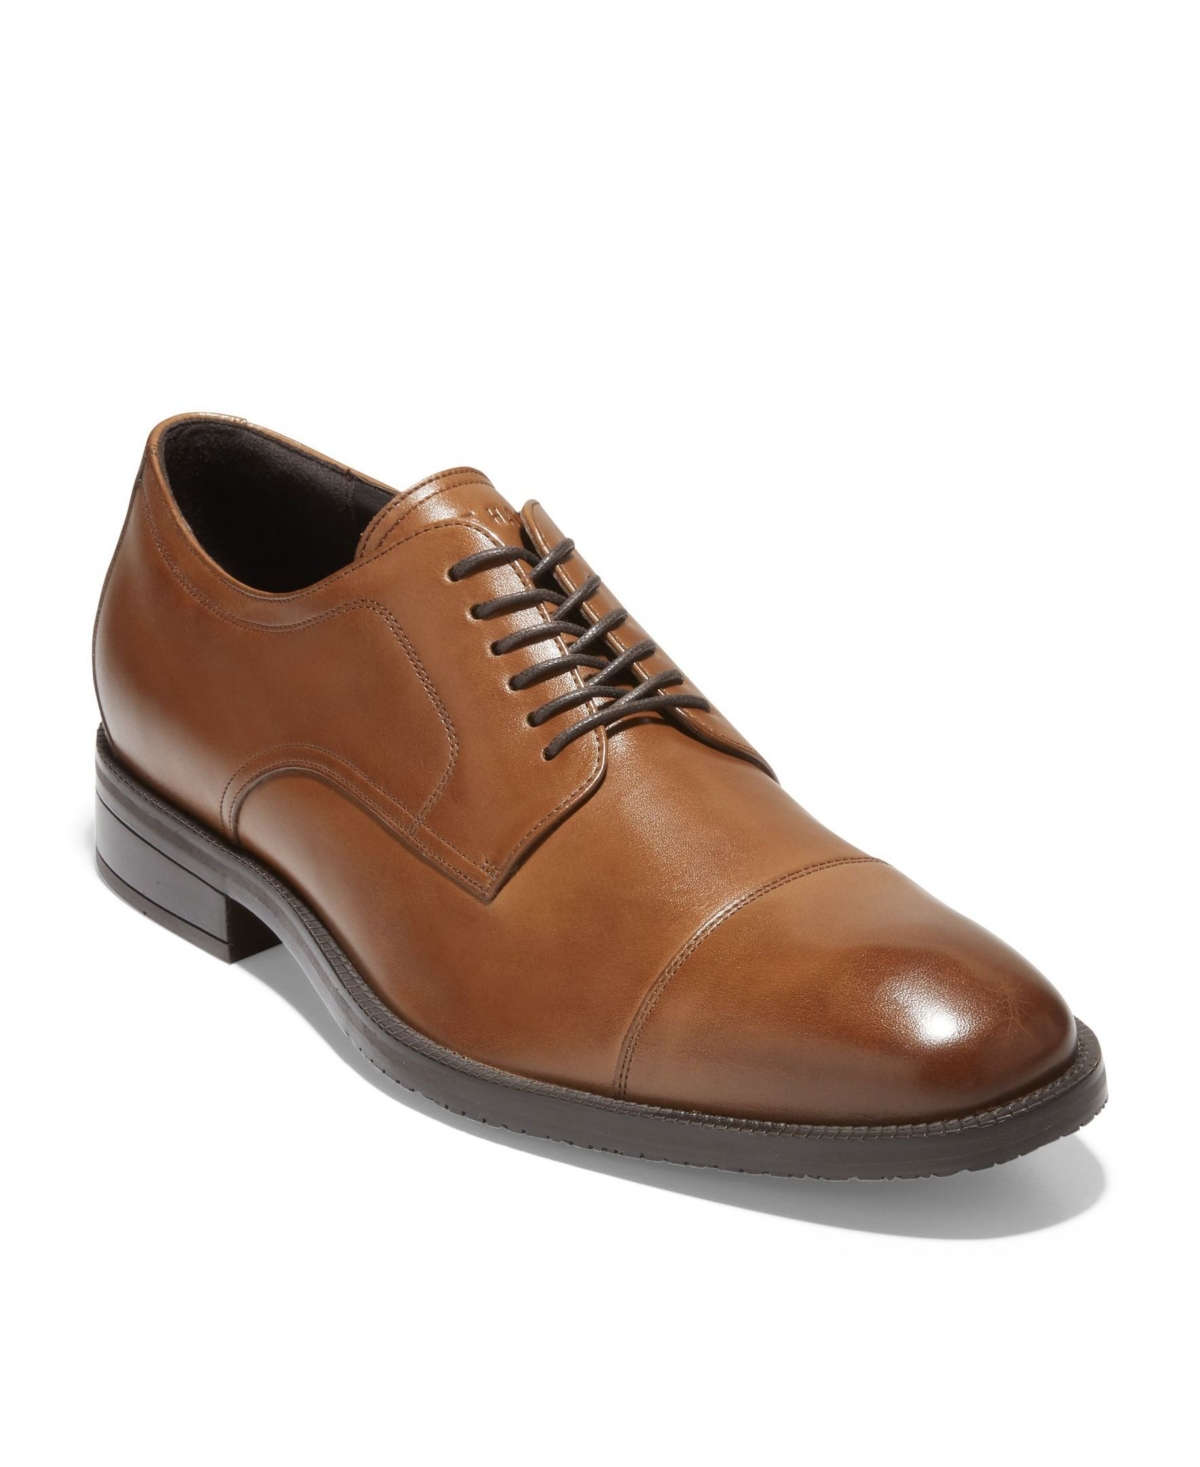 Men's Modern Essentials Cap Oxford Shoes - British Tan